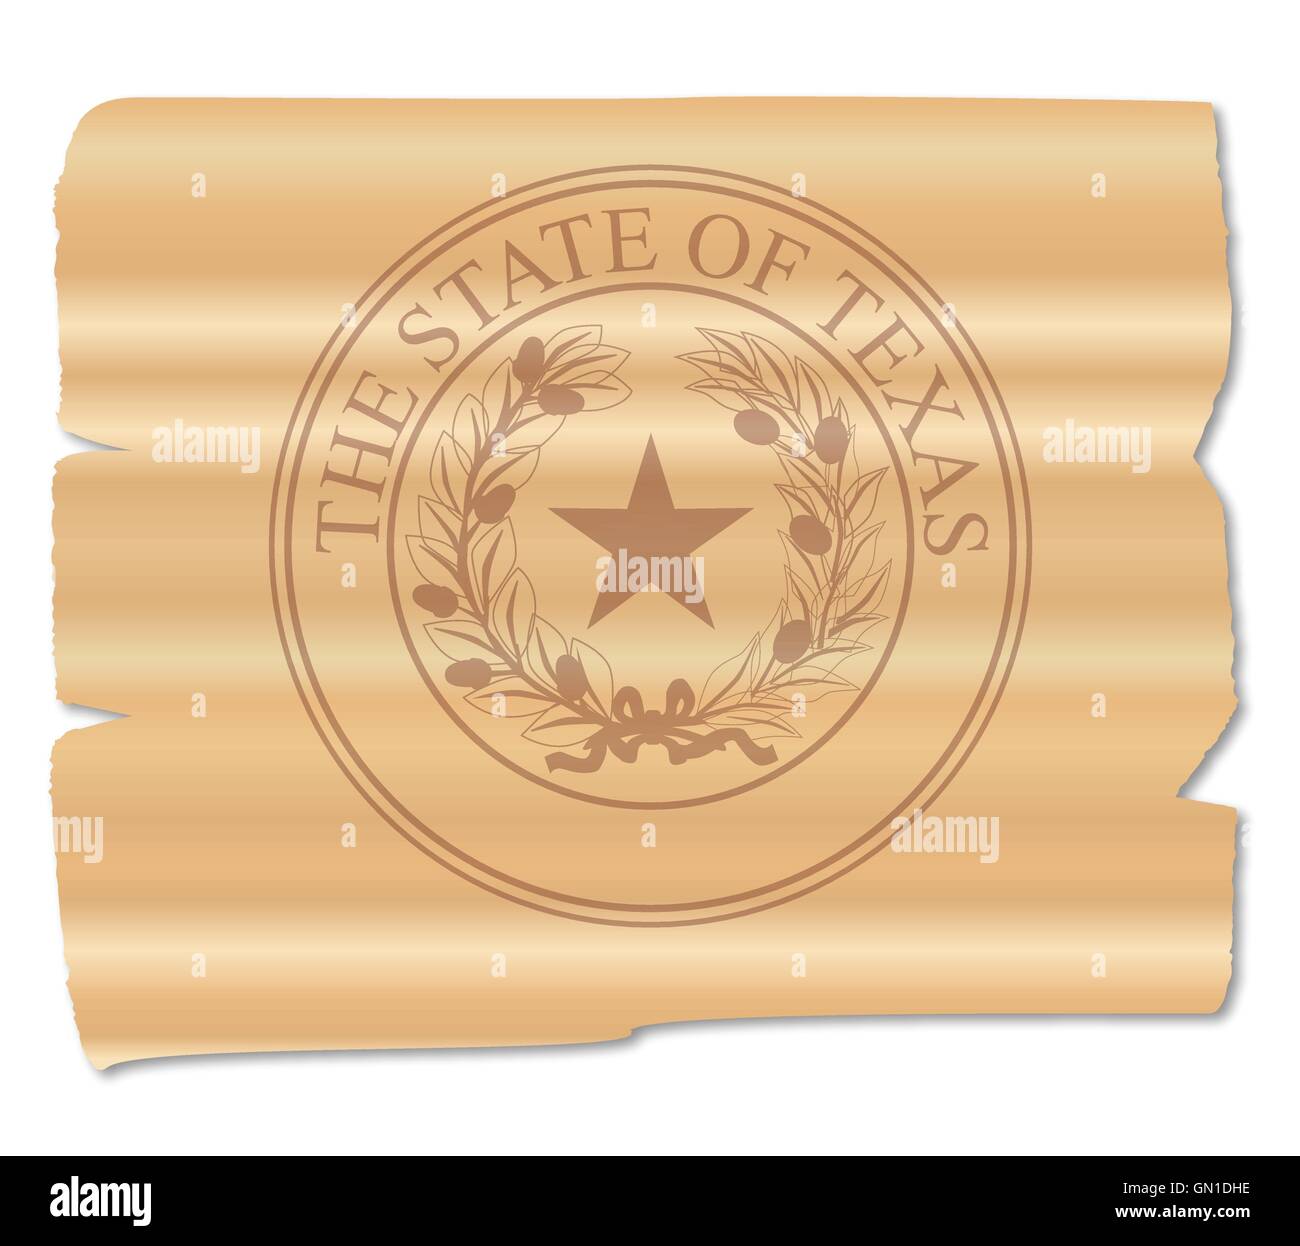 Texan State Seal Brand Stock Vector